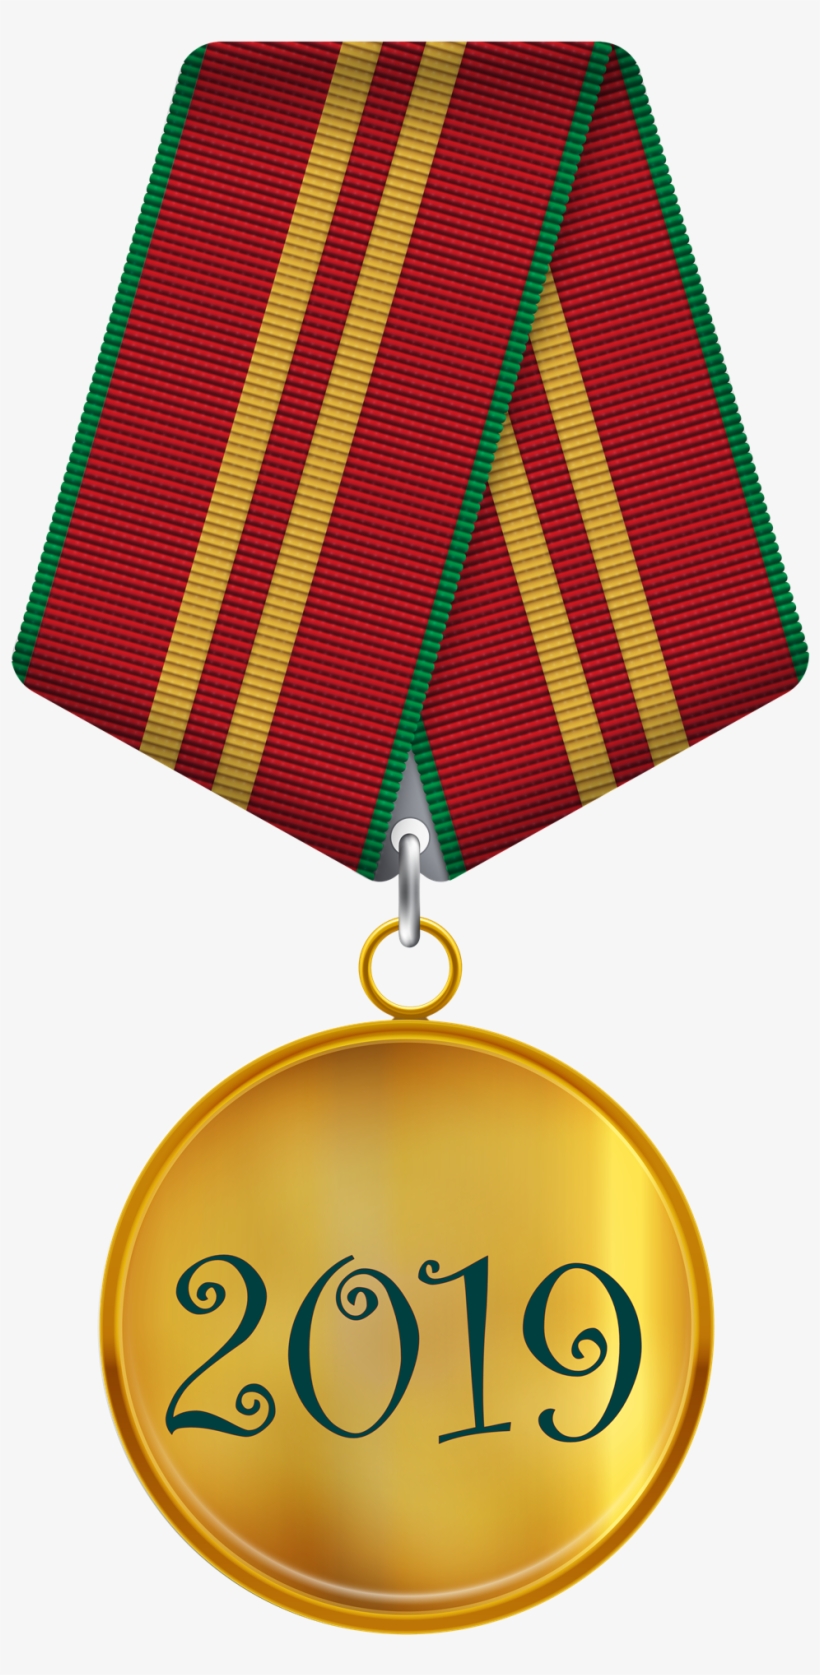 Gold Medal Png Clipart - Medal Png Clipart, transparent png #9600237